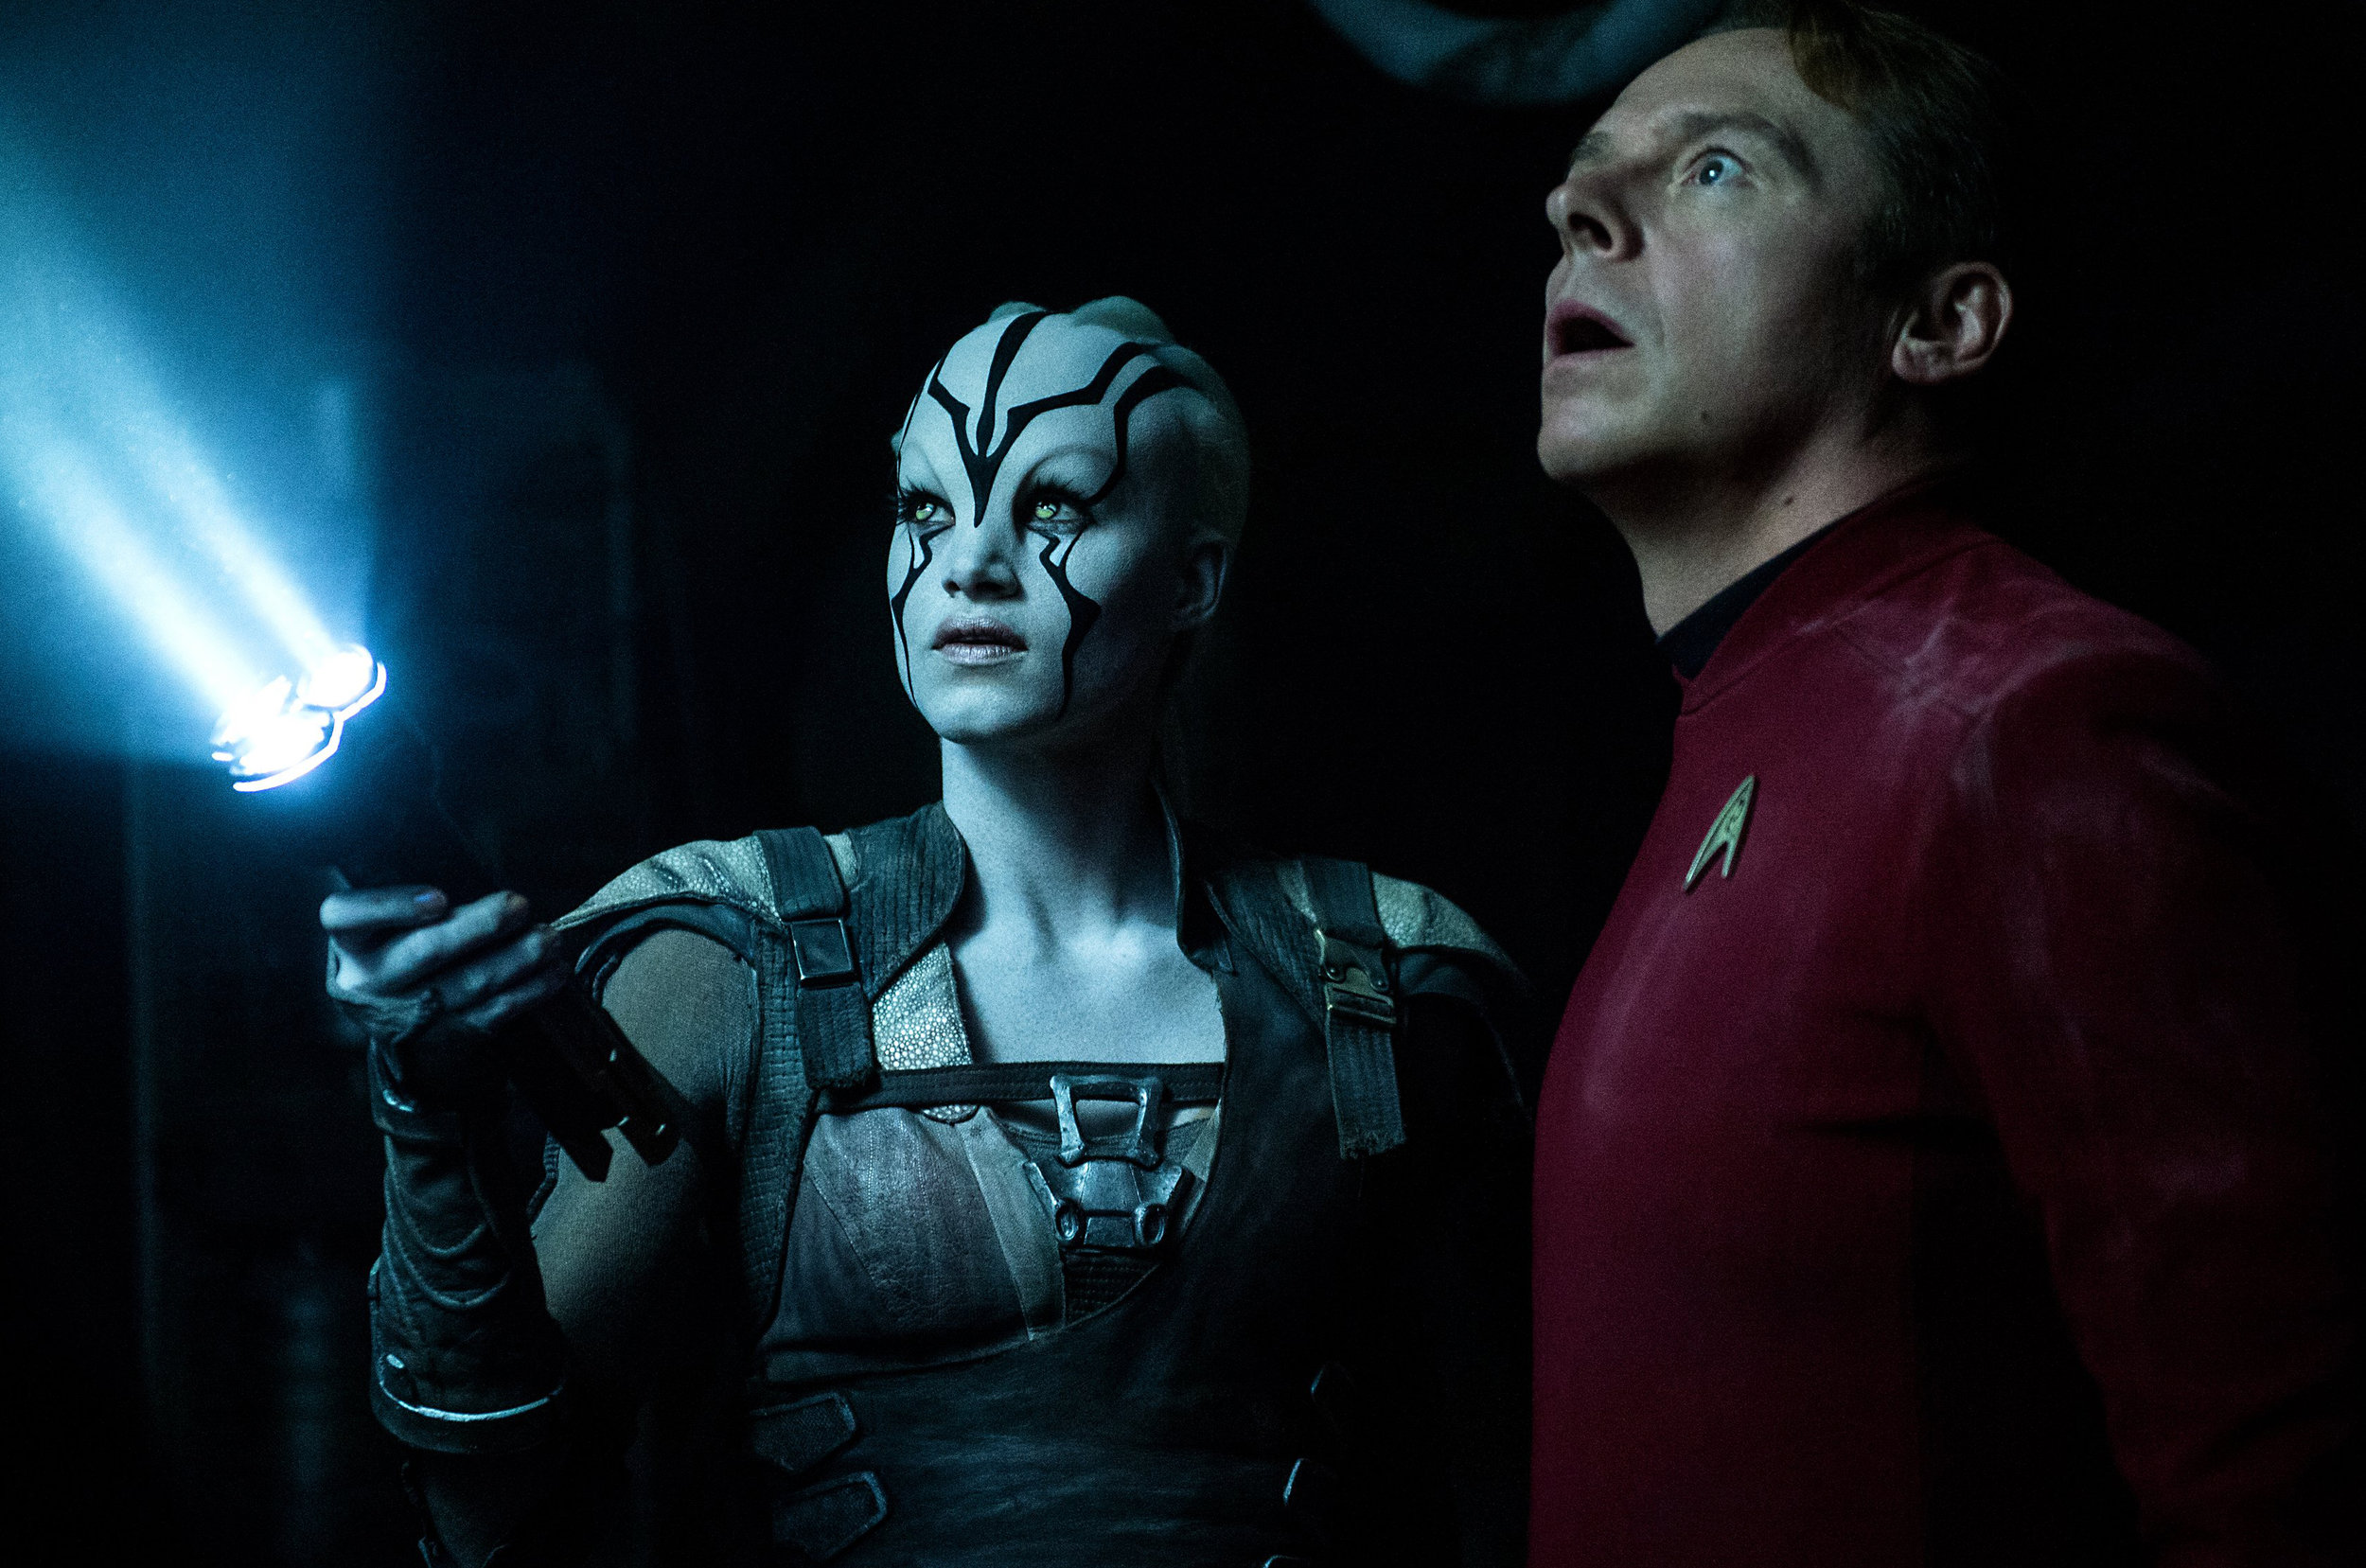 Sofia Boutella and Simon Pegg in 'Star Trek Beyond'.